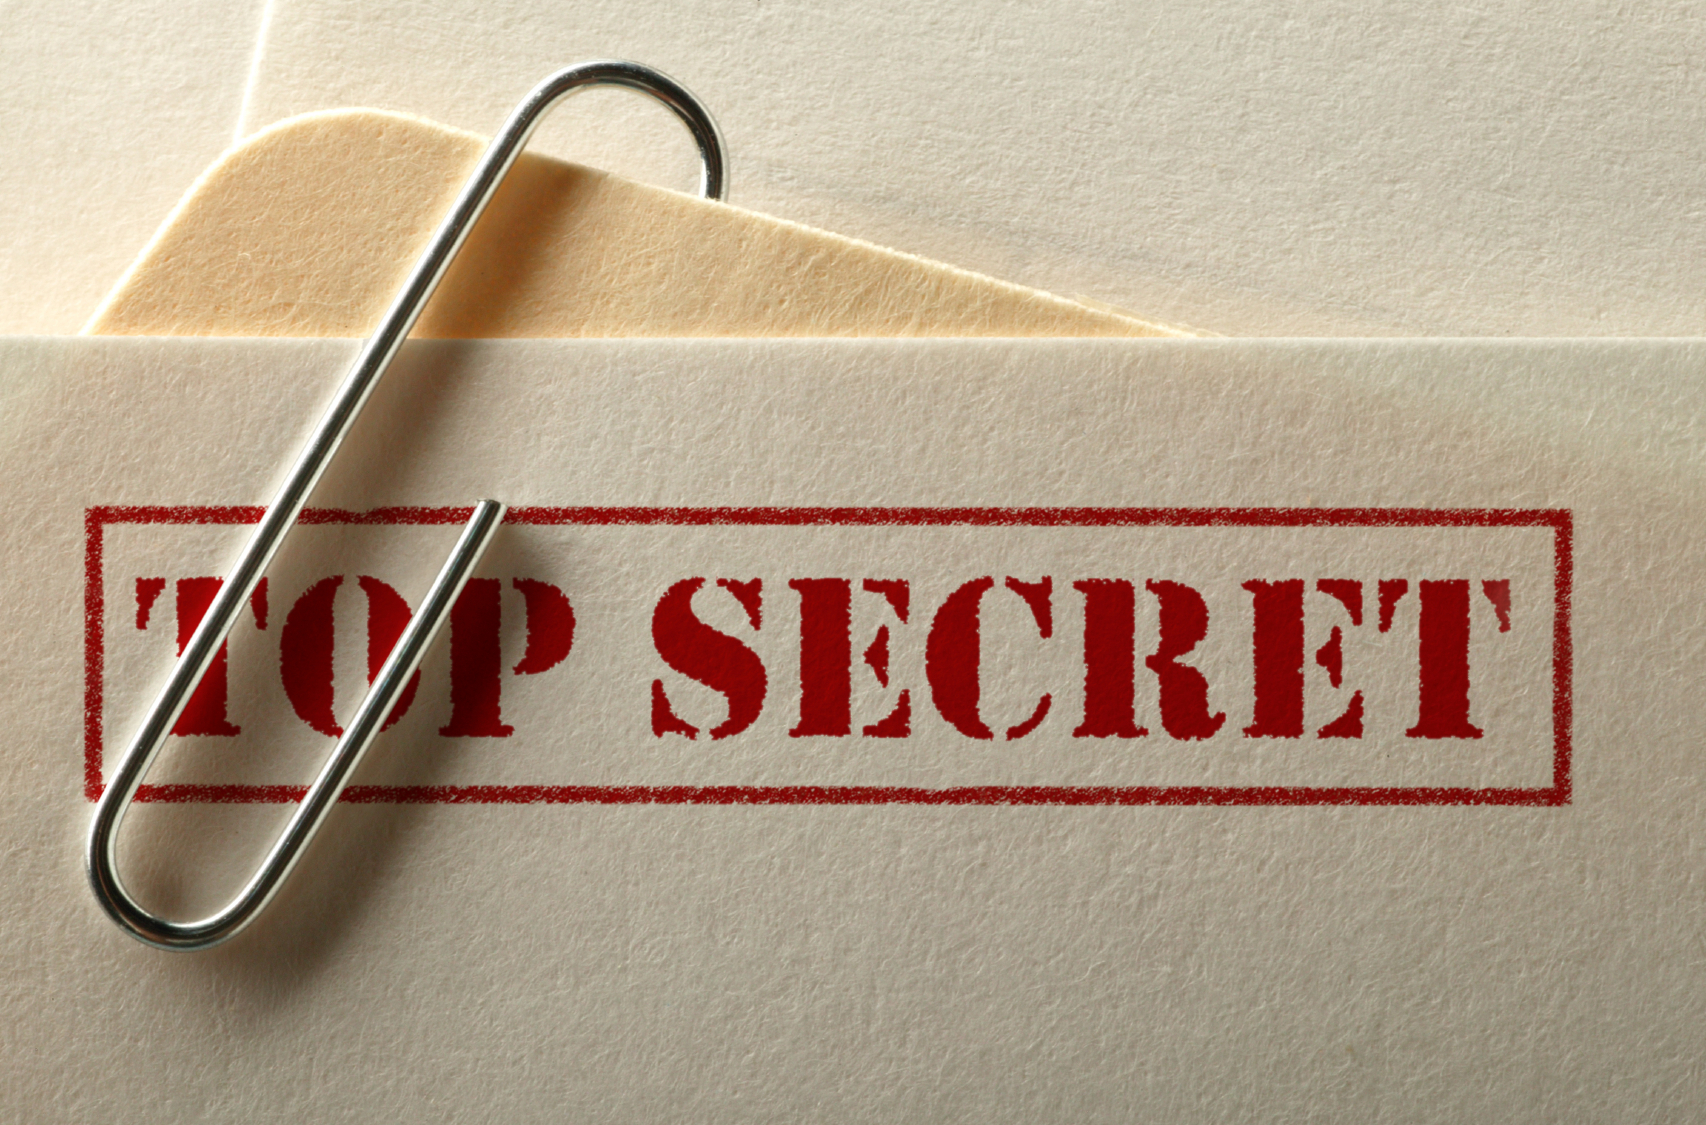 Marketing Secrets - (image) top secret file